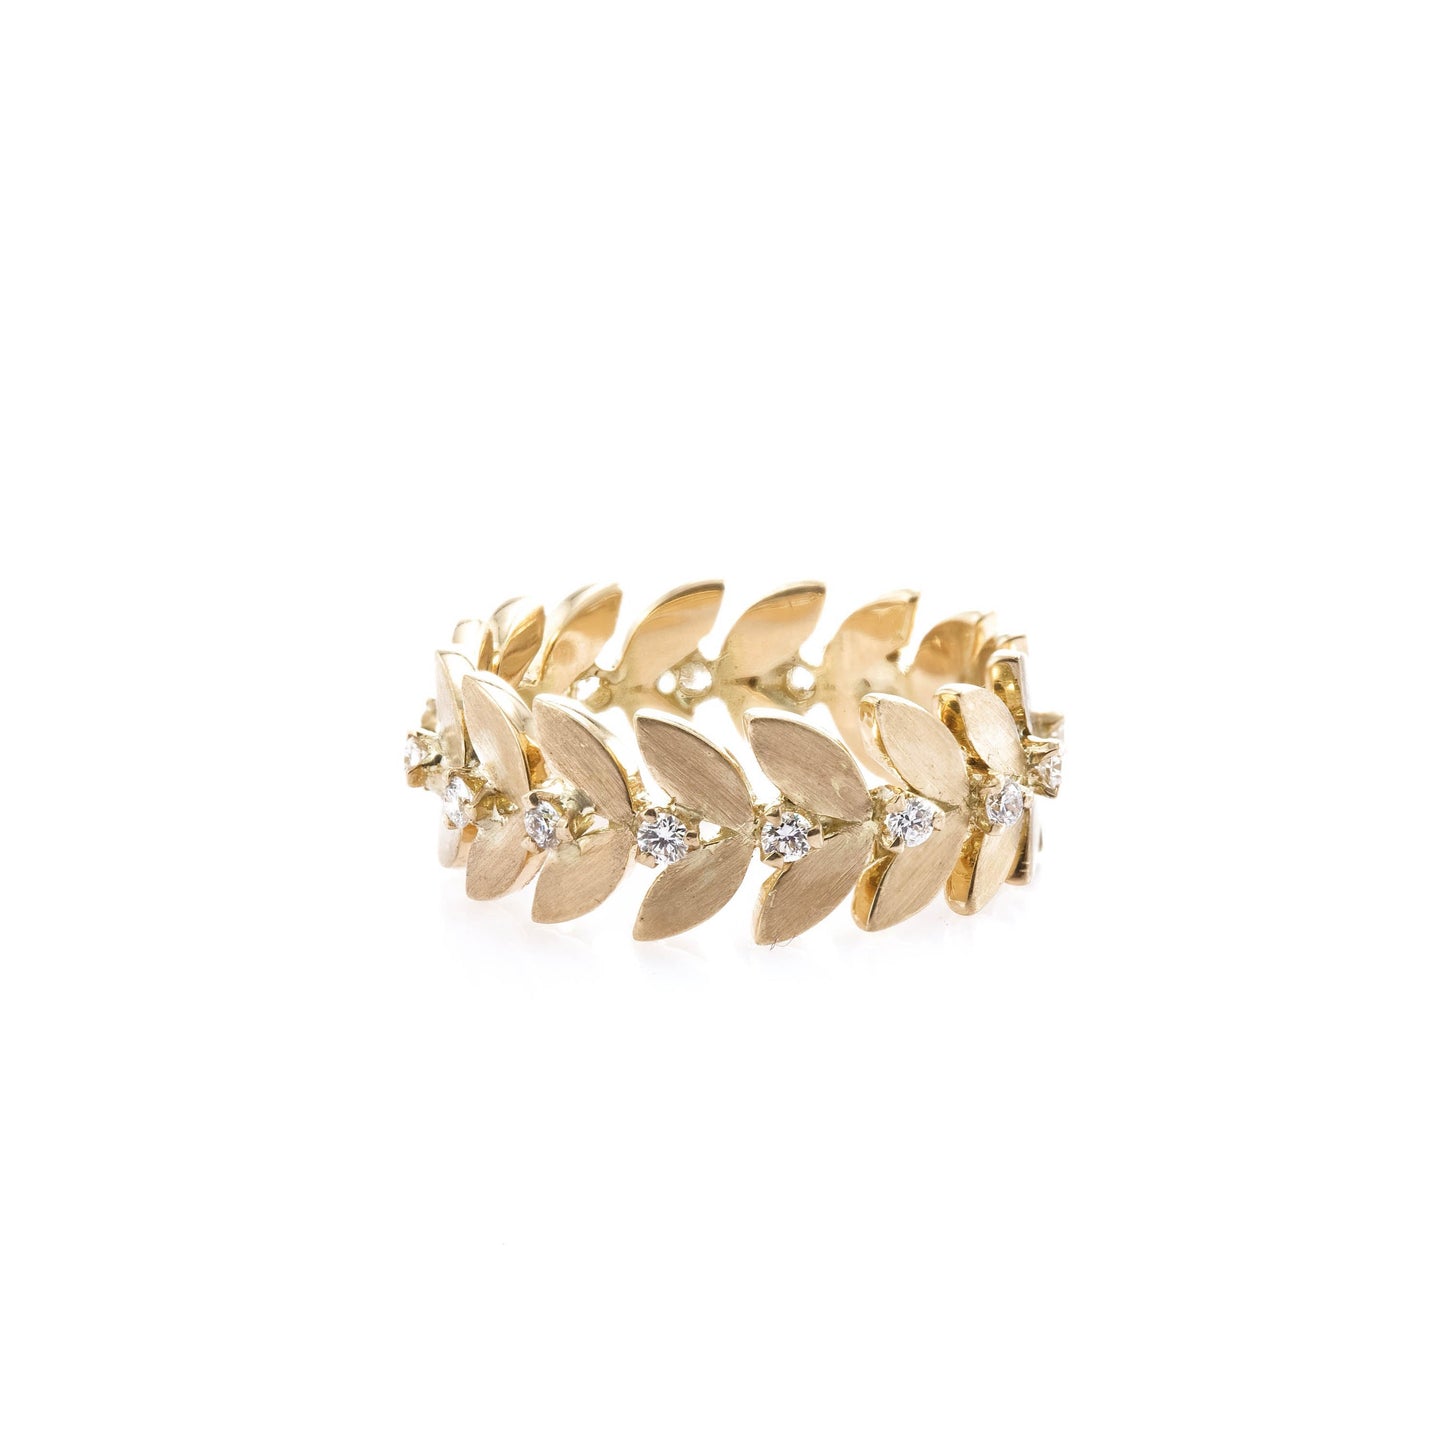 The Kavita Leaf Series Gold and Diamond Ring by Rasvihar